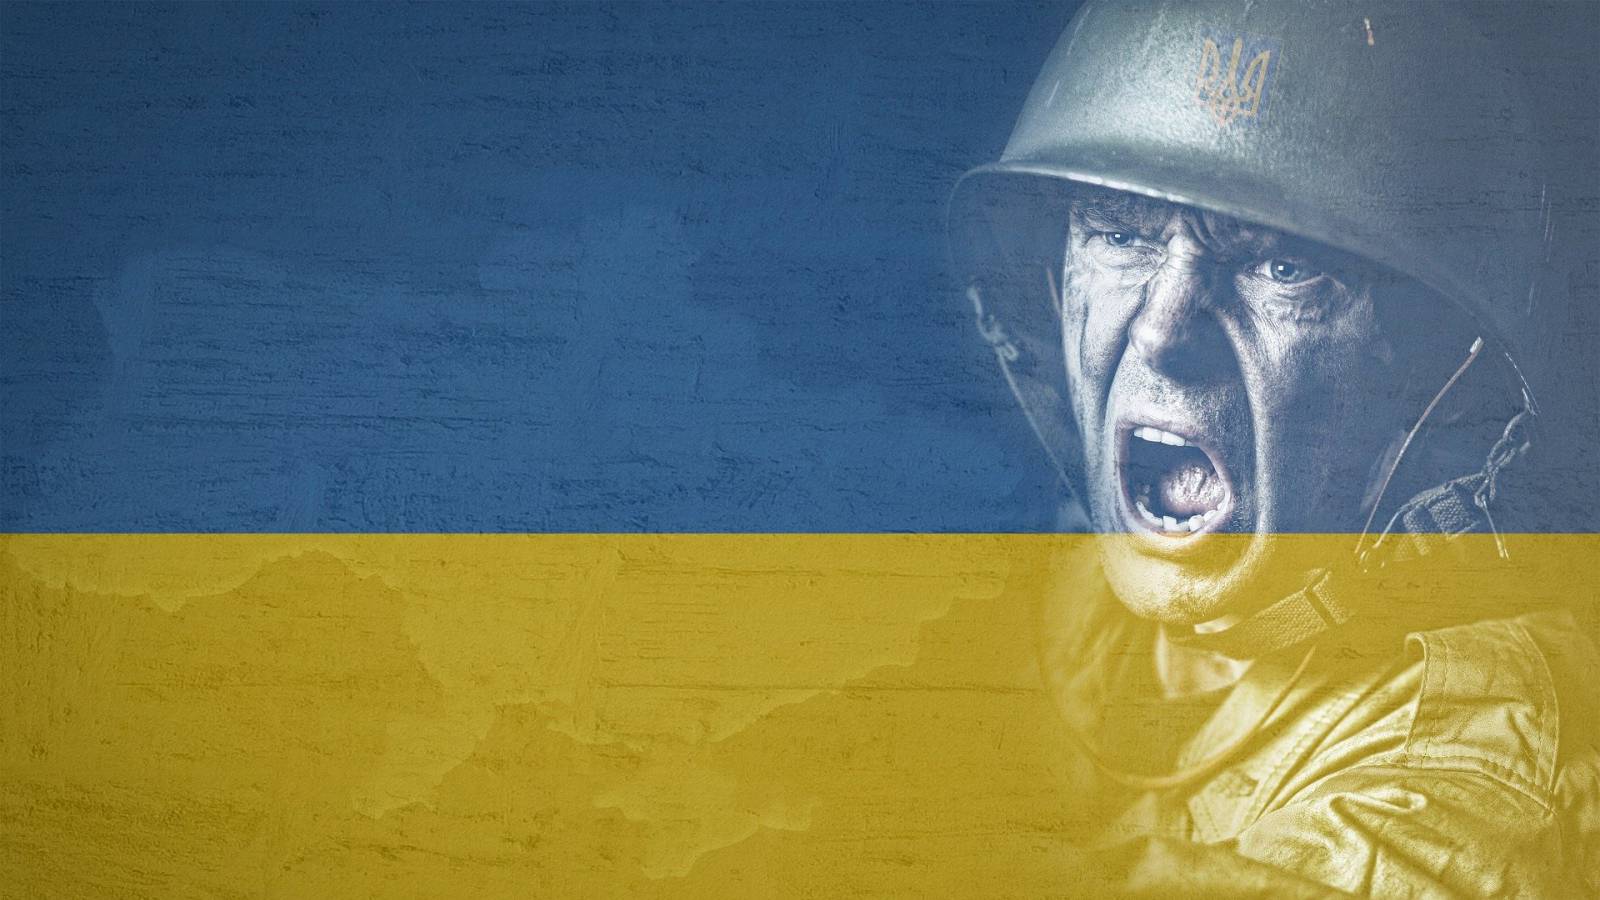 Racheta care a Lovit Polonia ar fi Putut fi Lansata de Ucraina